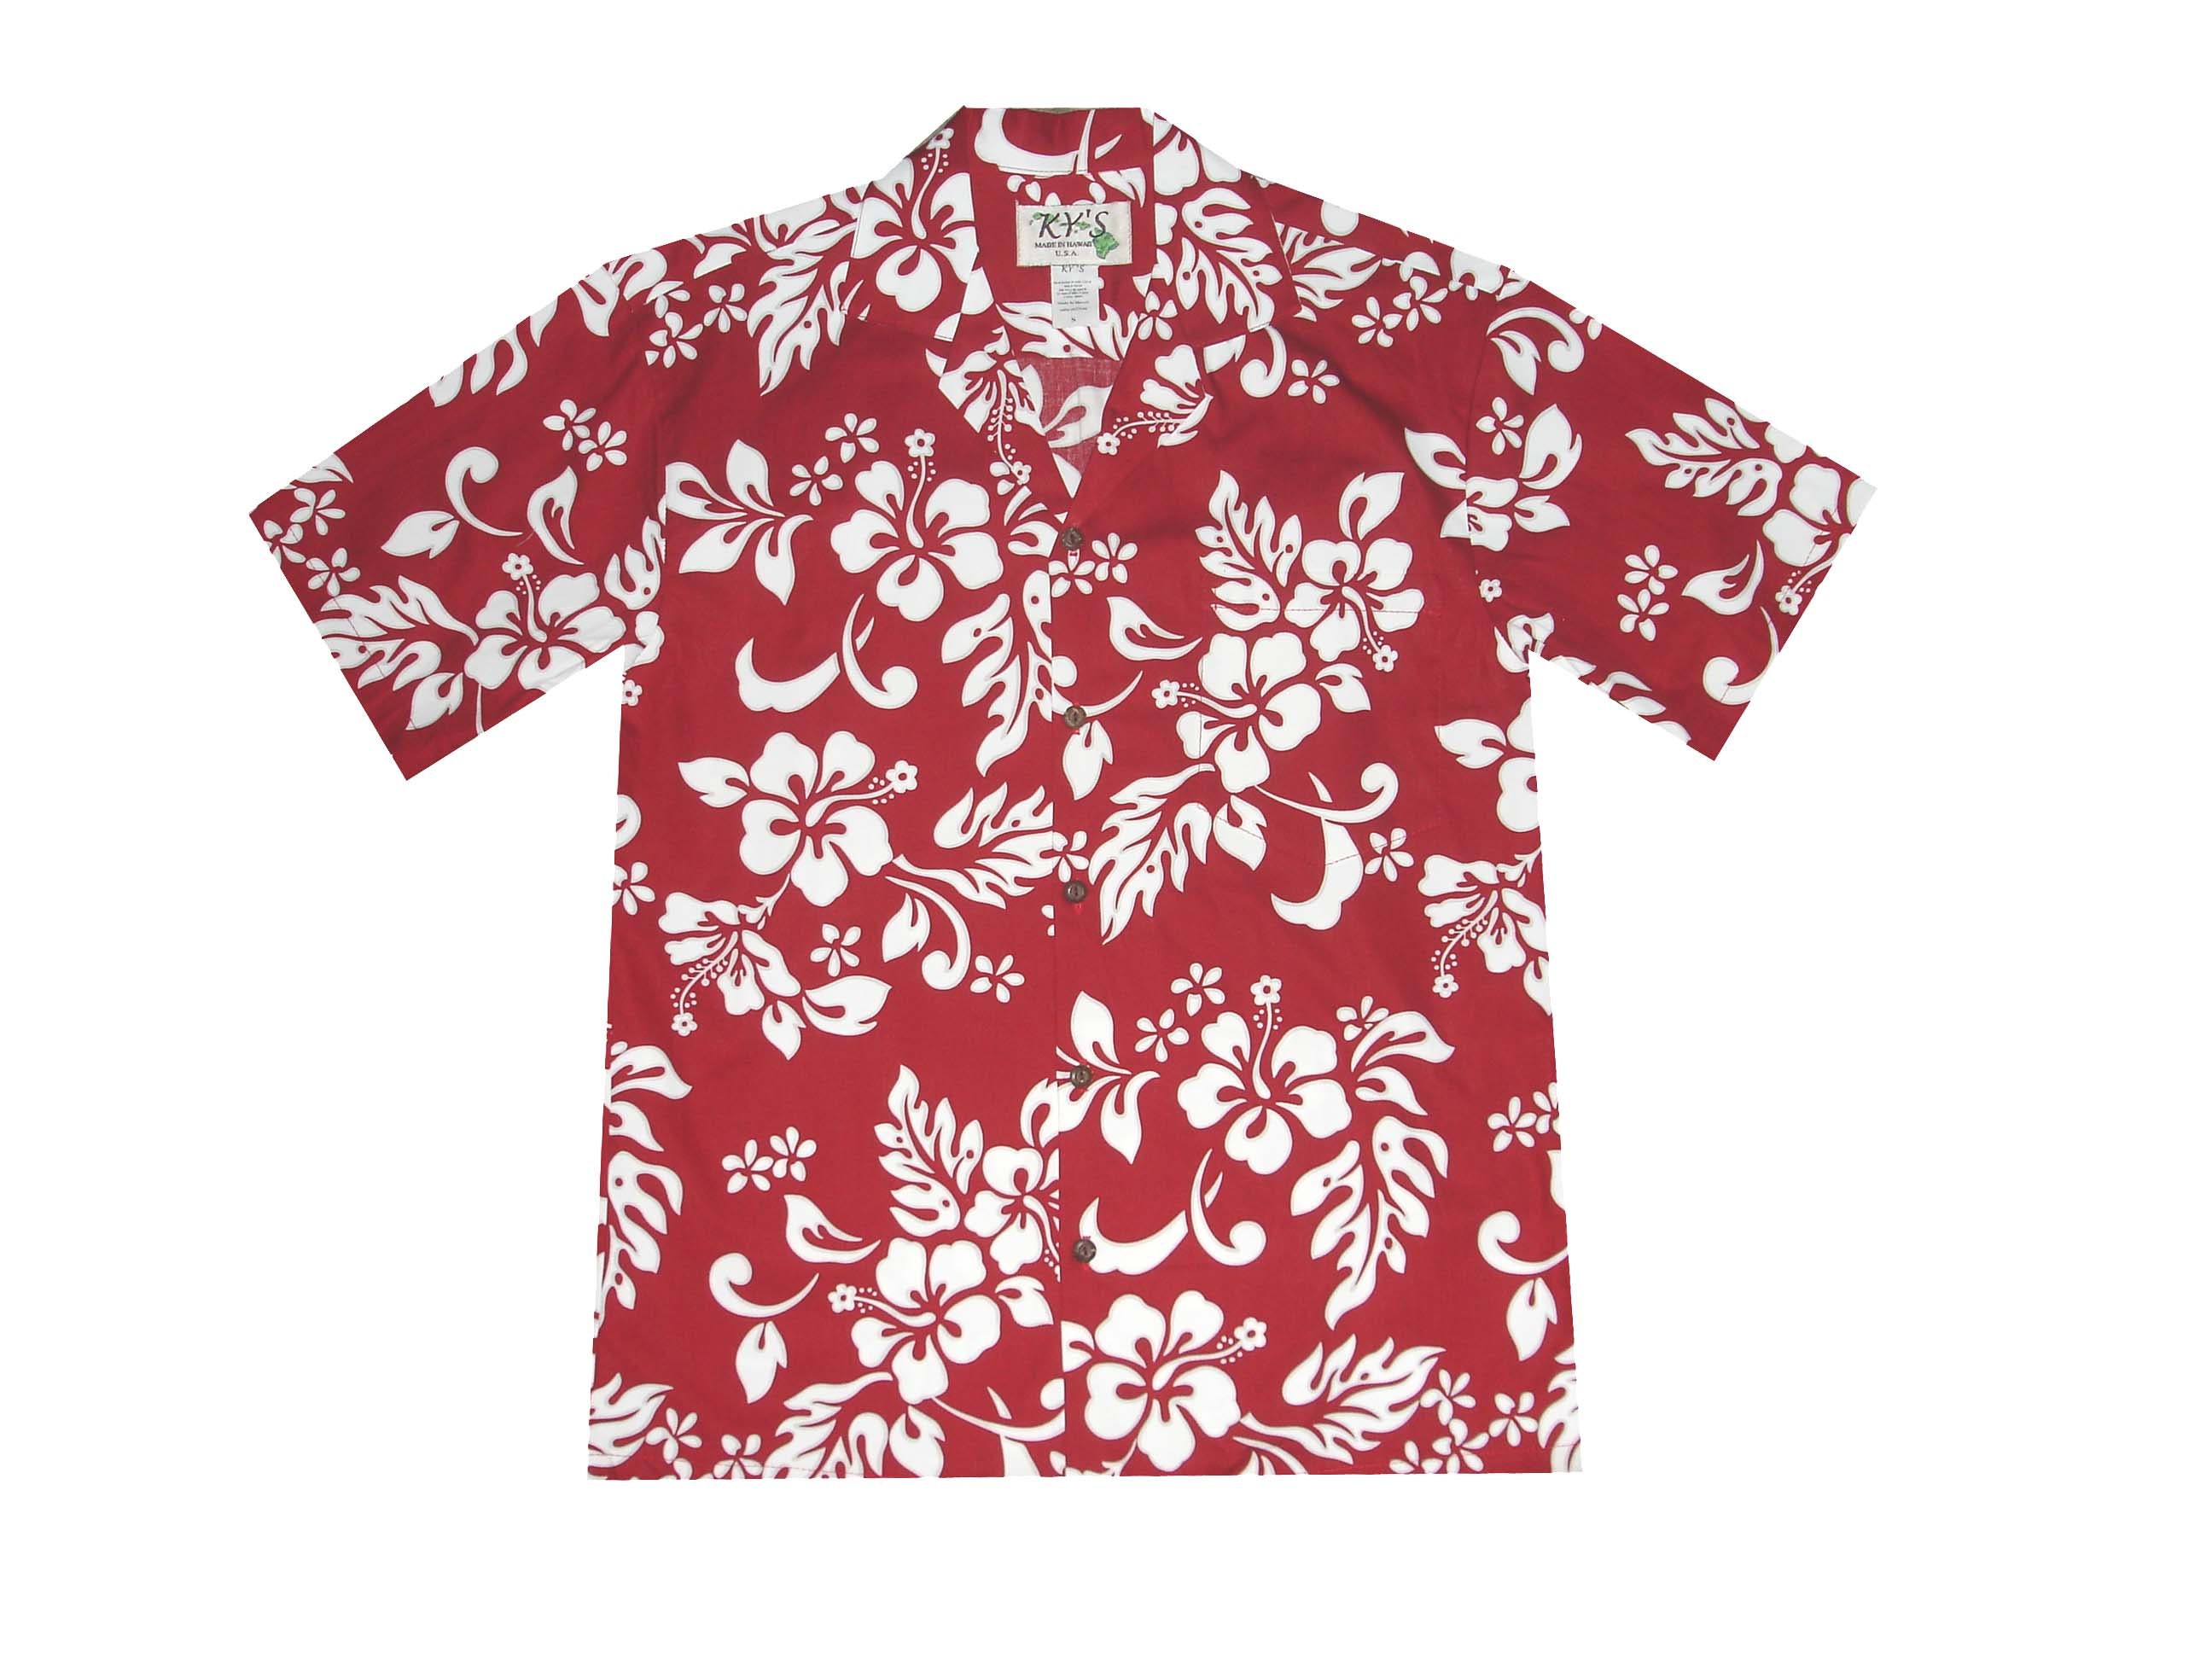 KY'S Wahiawa Tropical Navy Blue Cotton Men's Slim Fit Hawaiian Shirt , M